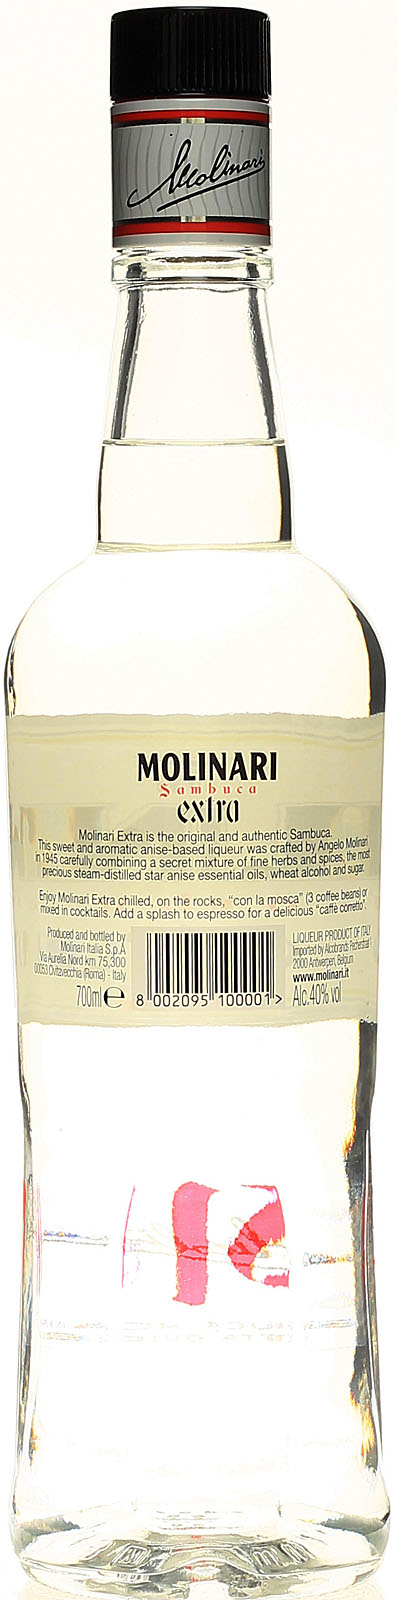 Molinari Sambuca Extra 0,7 Liter 40% Vol., hier bei uns